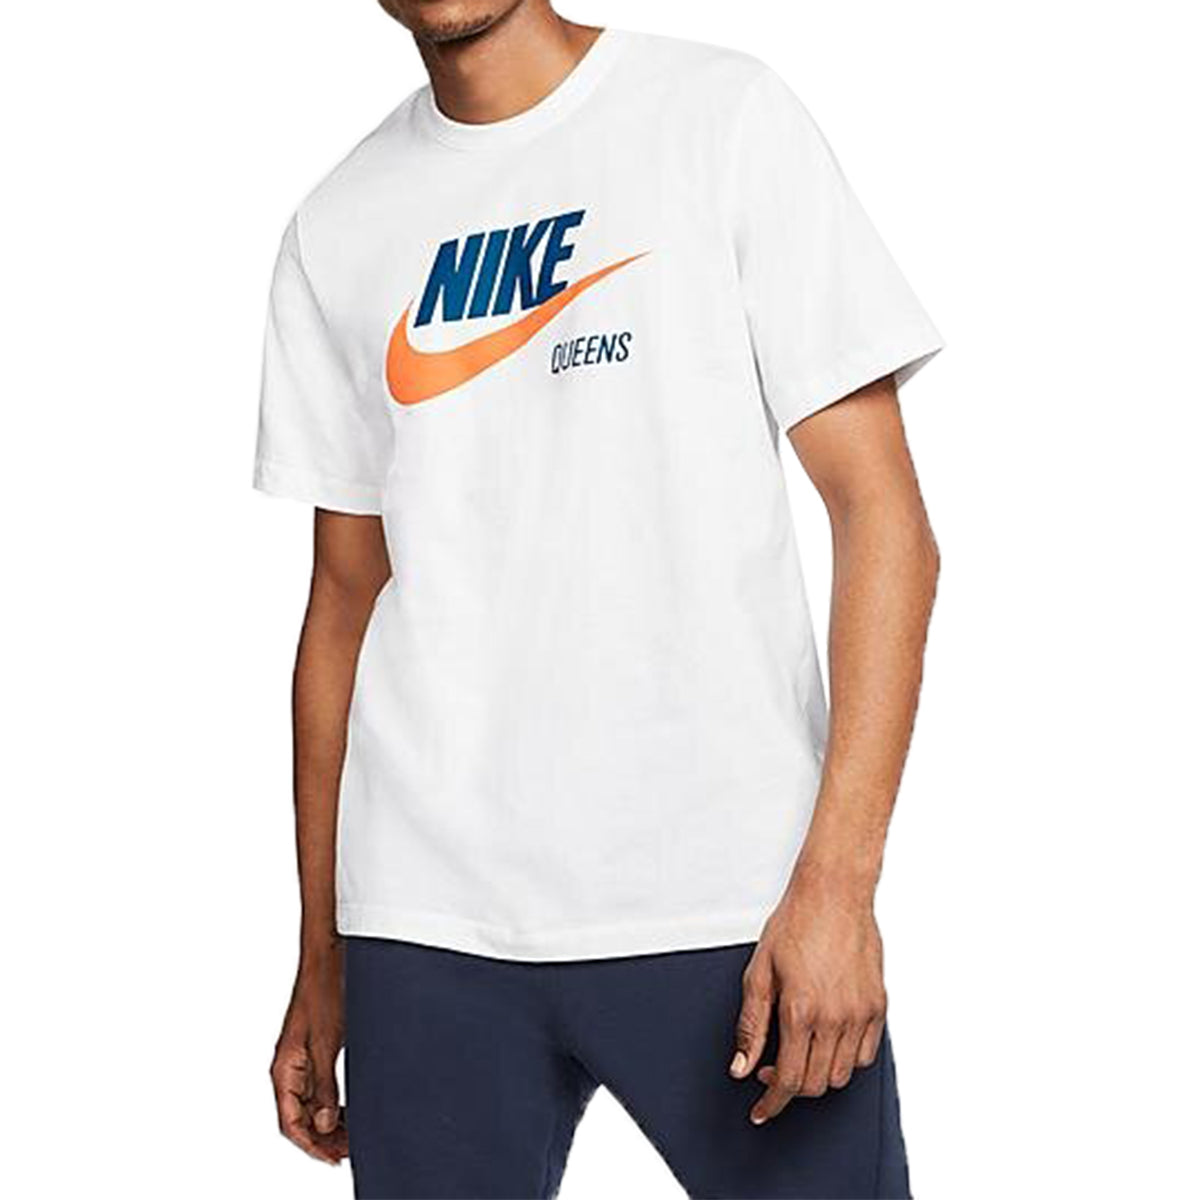 Nike Sportswear Nsw "Queens" Tee Mens Style : Cw4696